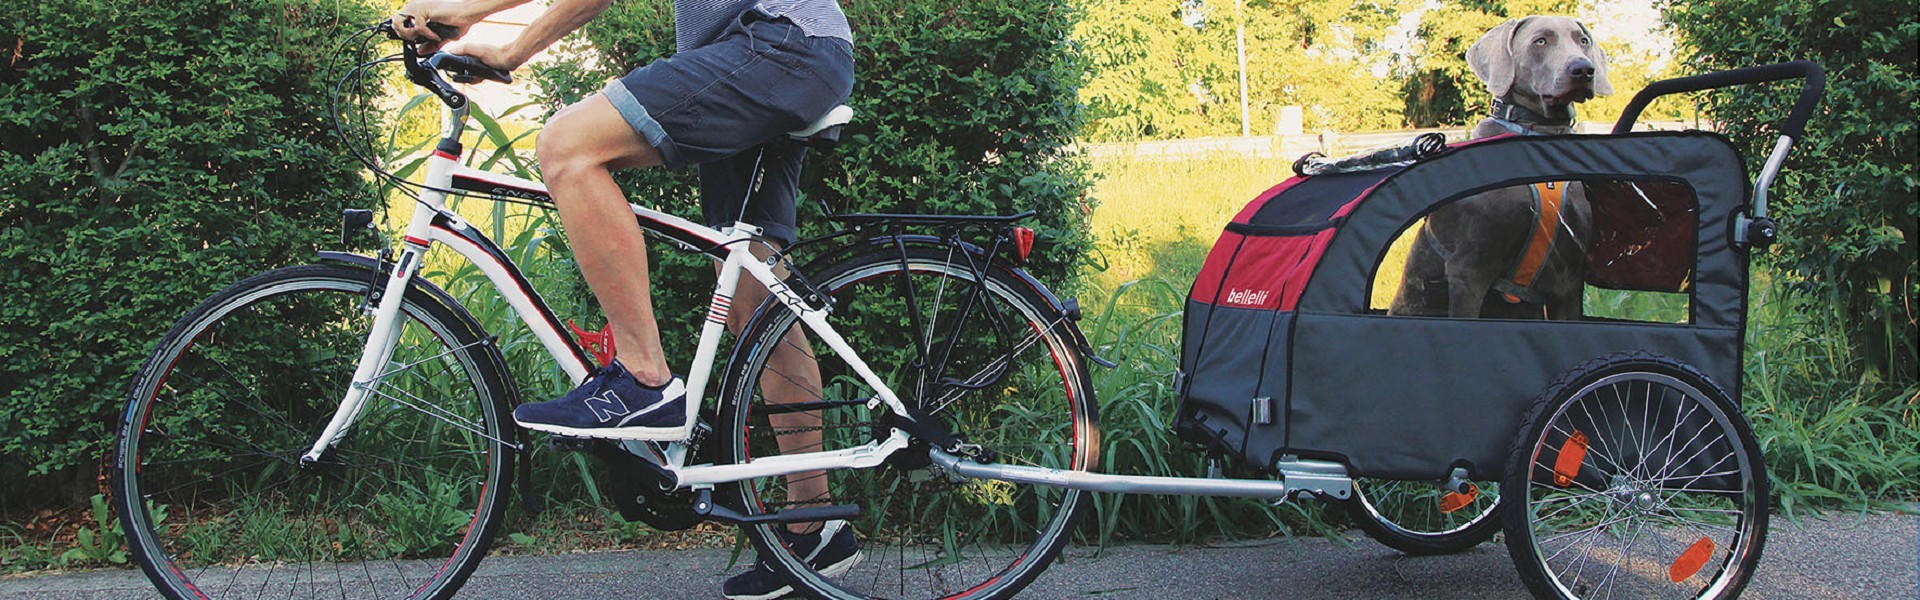 italy bike friendly | Bike rental portofino | bike rent in riviera | electric bike in italy